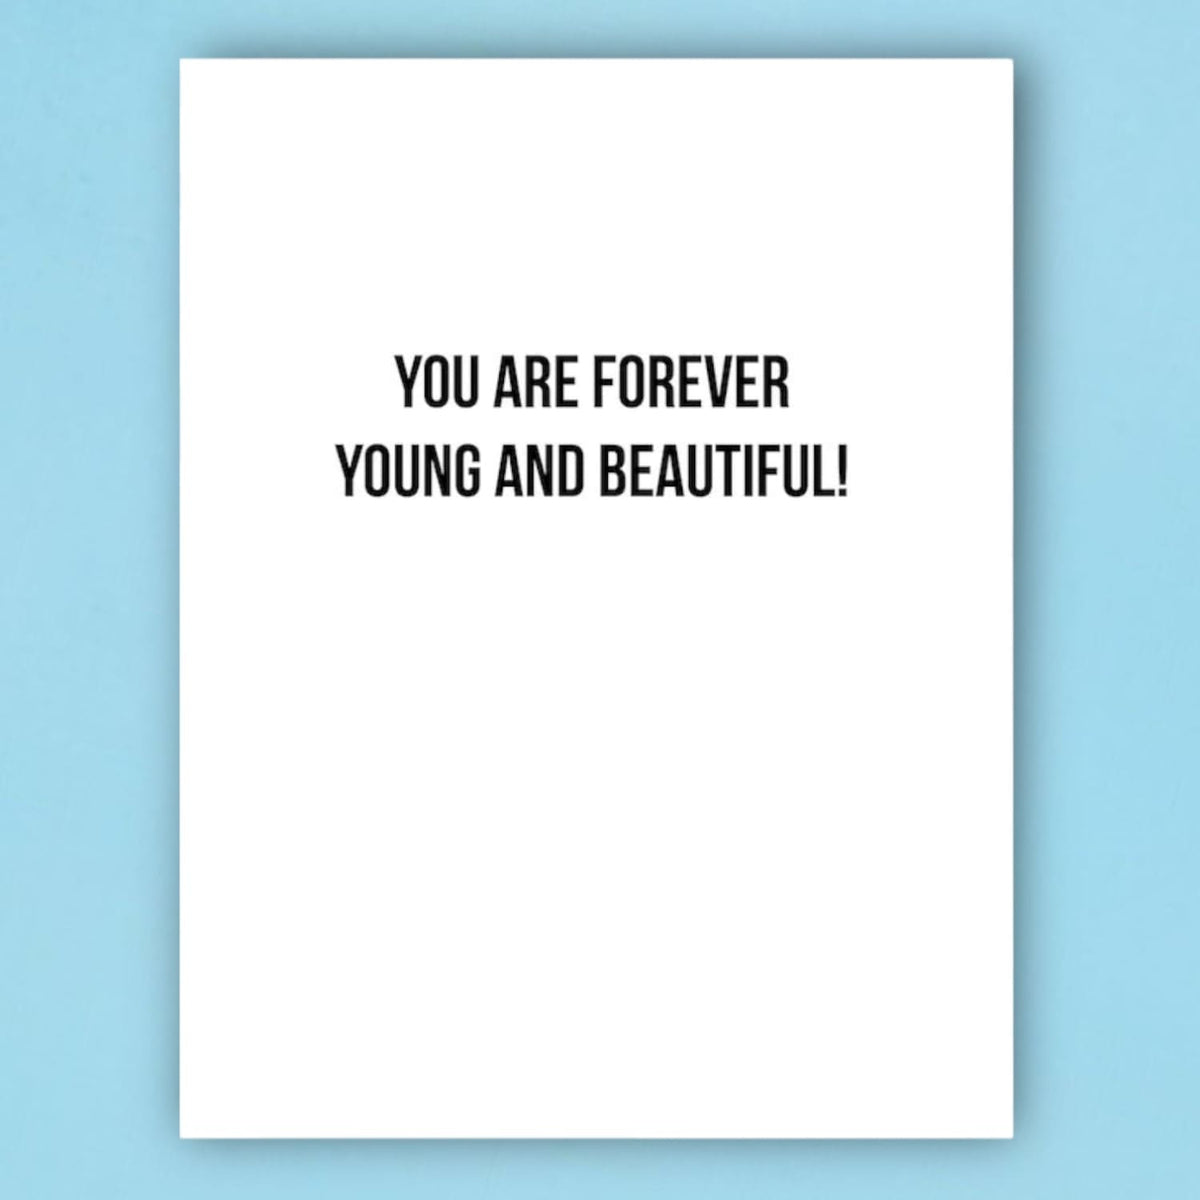 Lana Del Ray Birthday Greeting Card - Lgbtq Owned Made